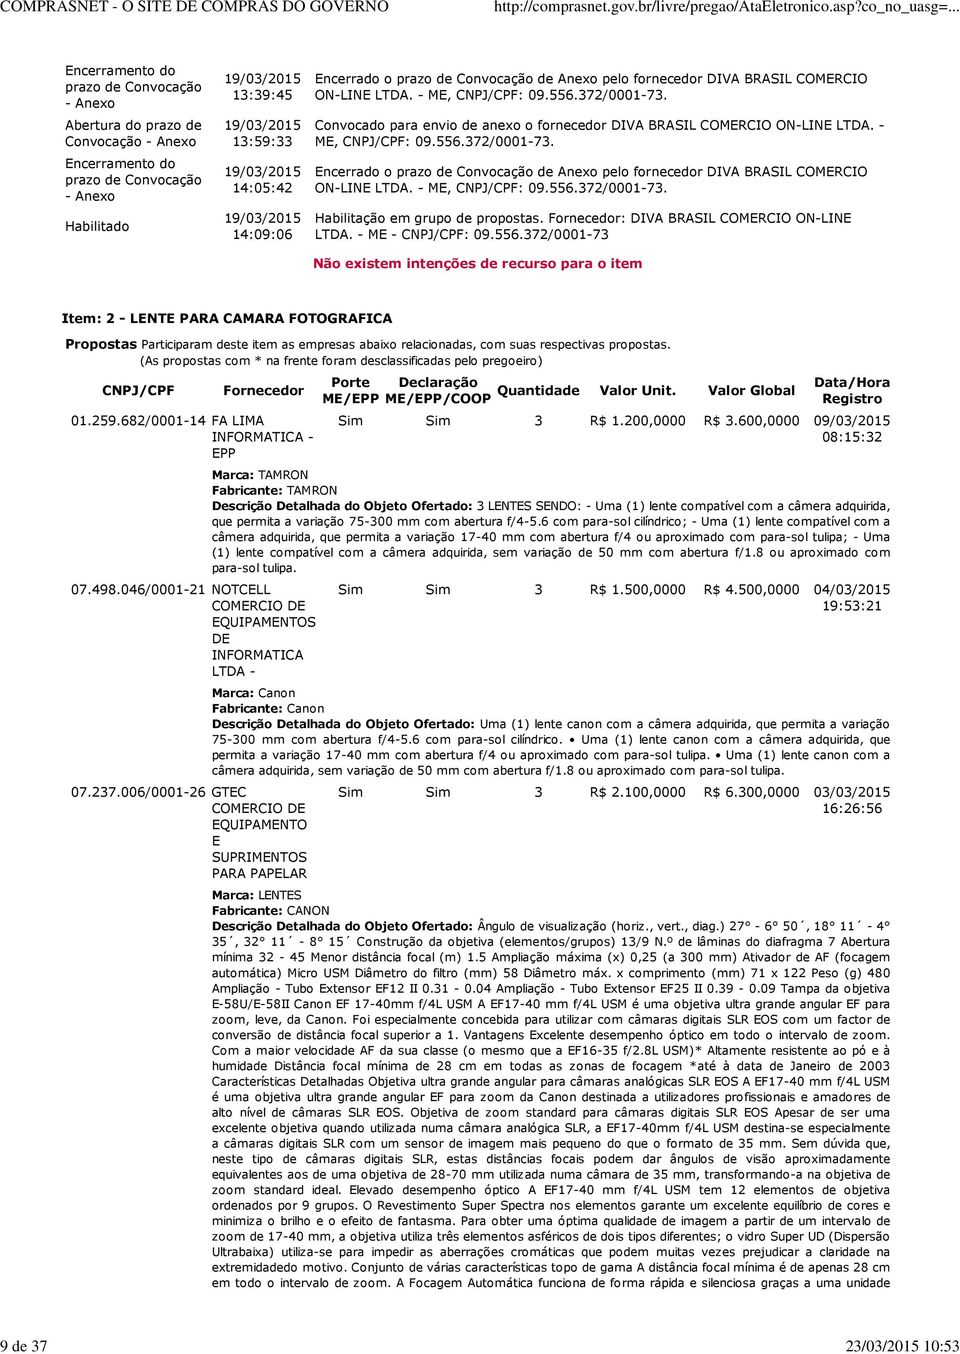 Convocado para envio de anexo o fornecedor DIVA BRASIL COMERCIO ON-LINE LTDA. - ME, CNPJ/CPF: 09.556.372/0001-73.